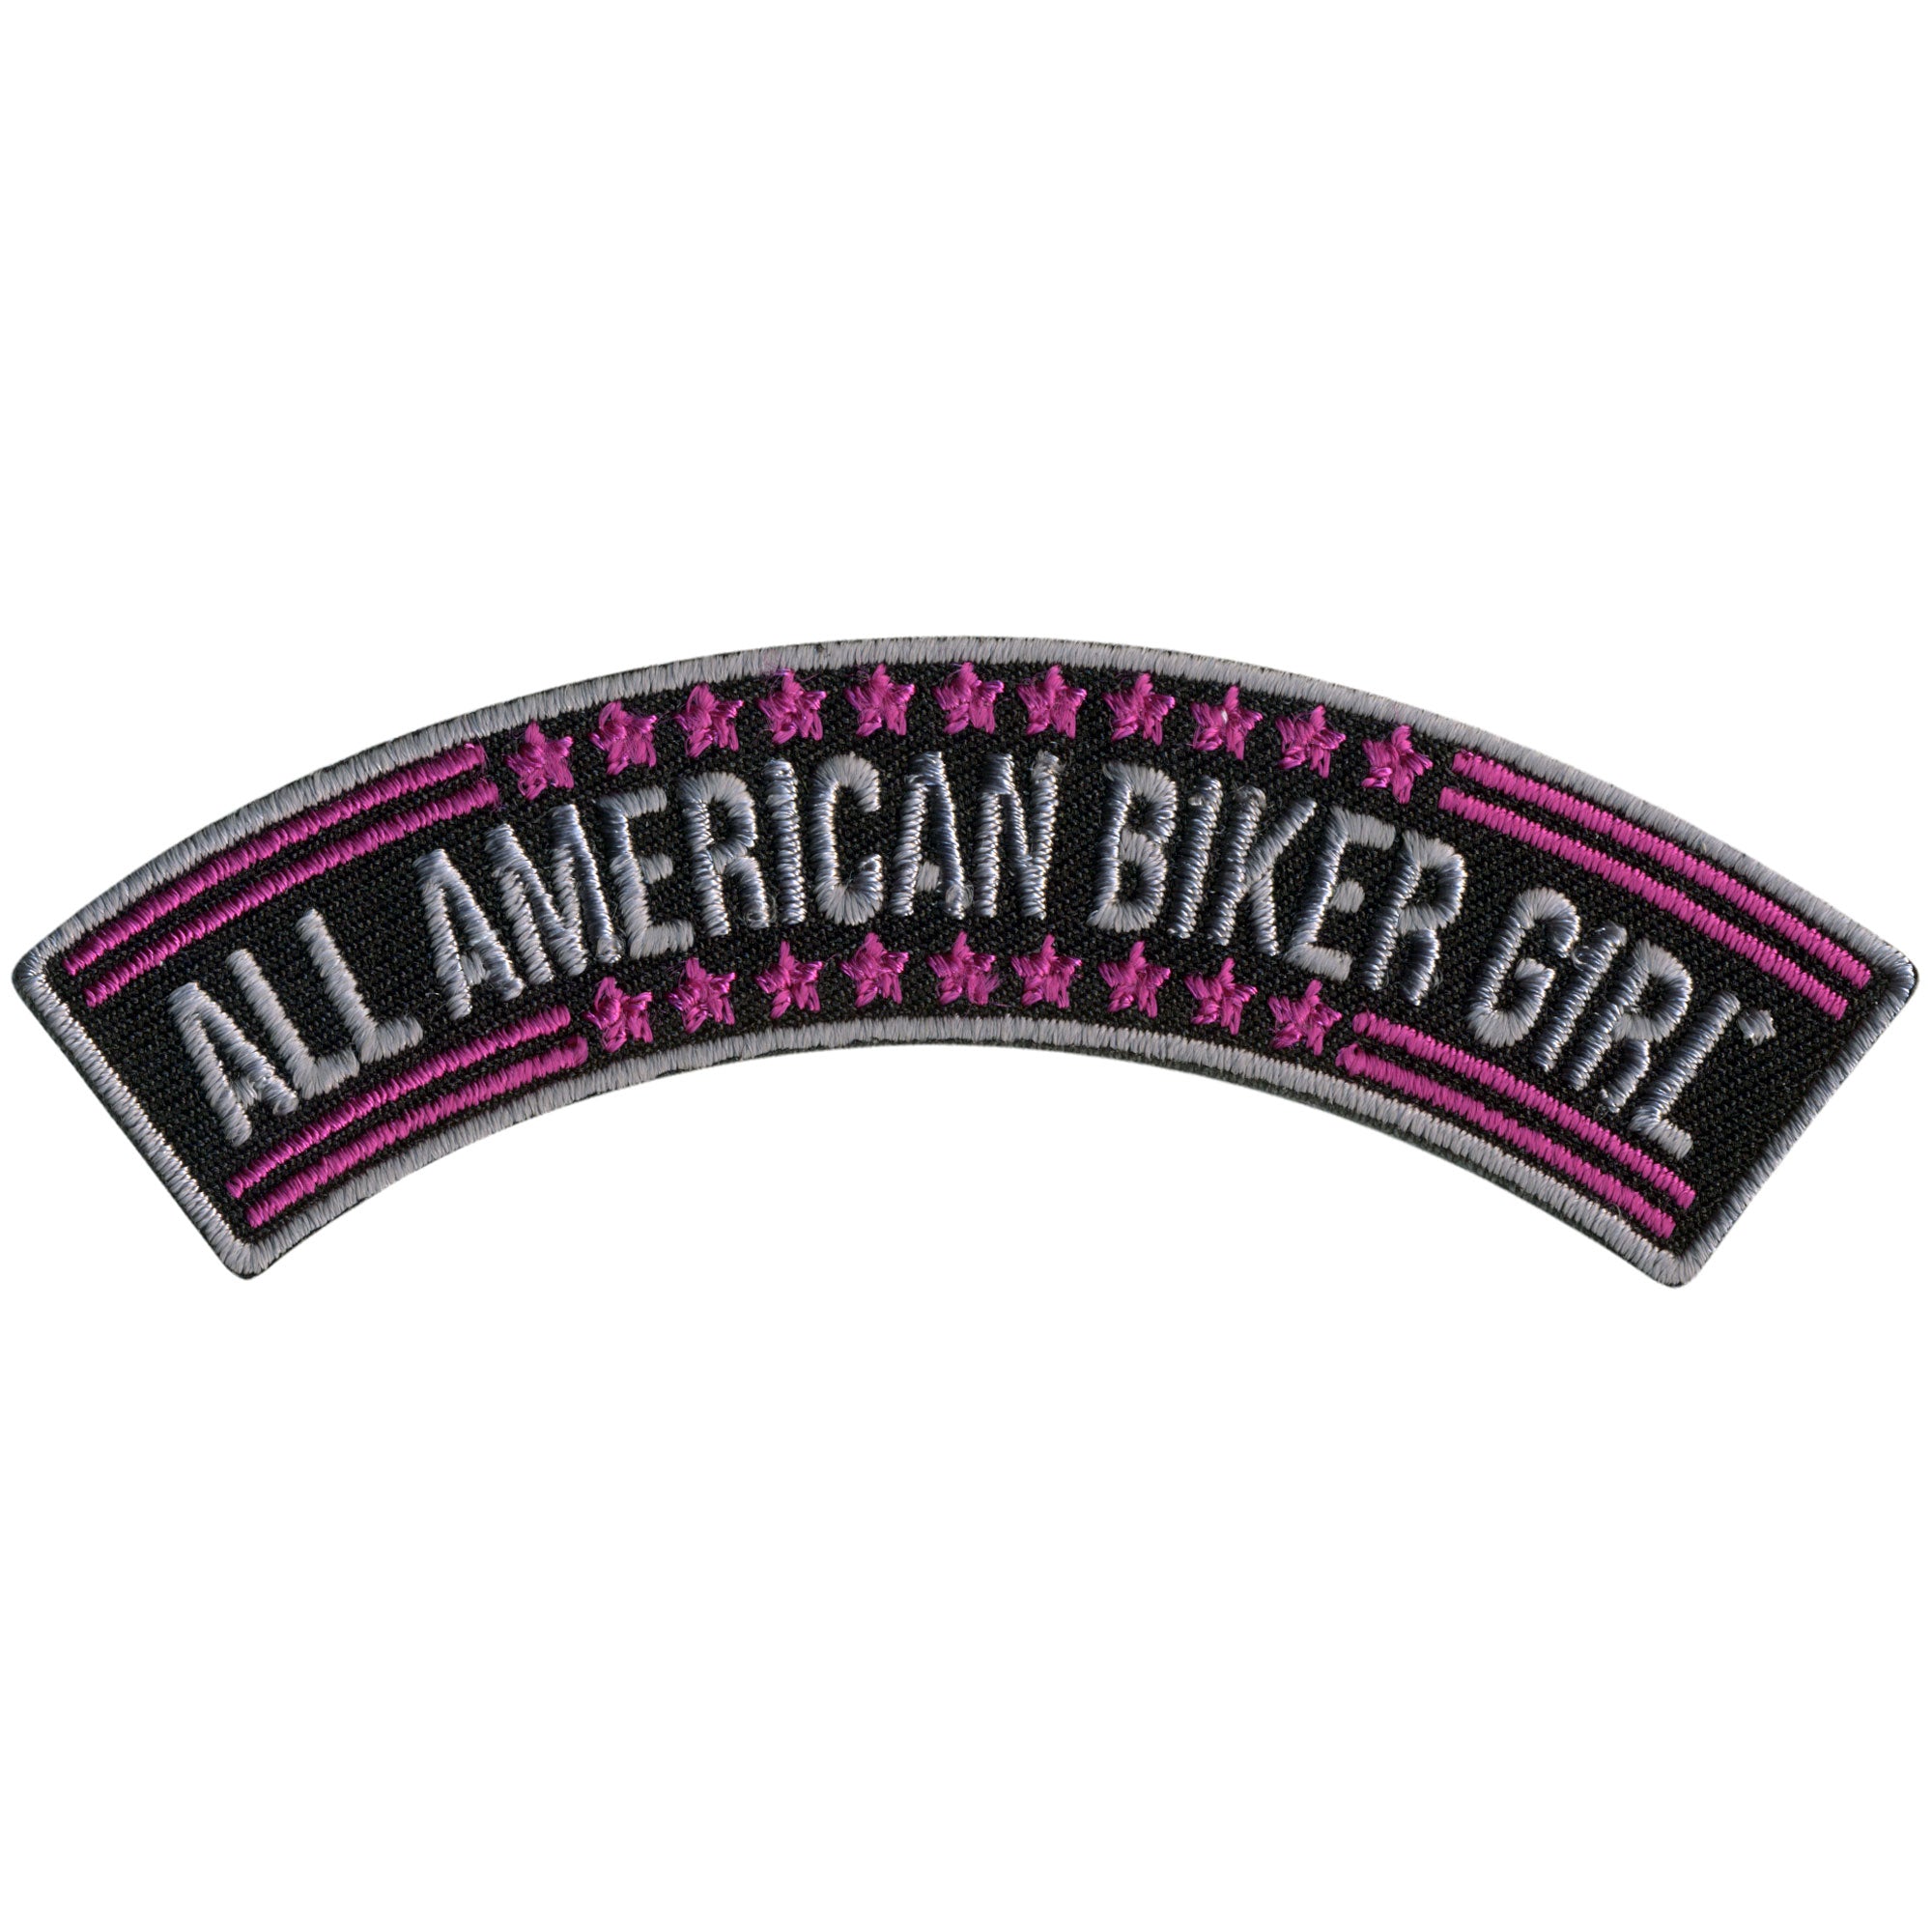 Hot Leathers All American Biker Girl 4” X 1” Top Rocker Patch